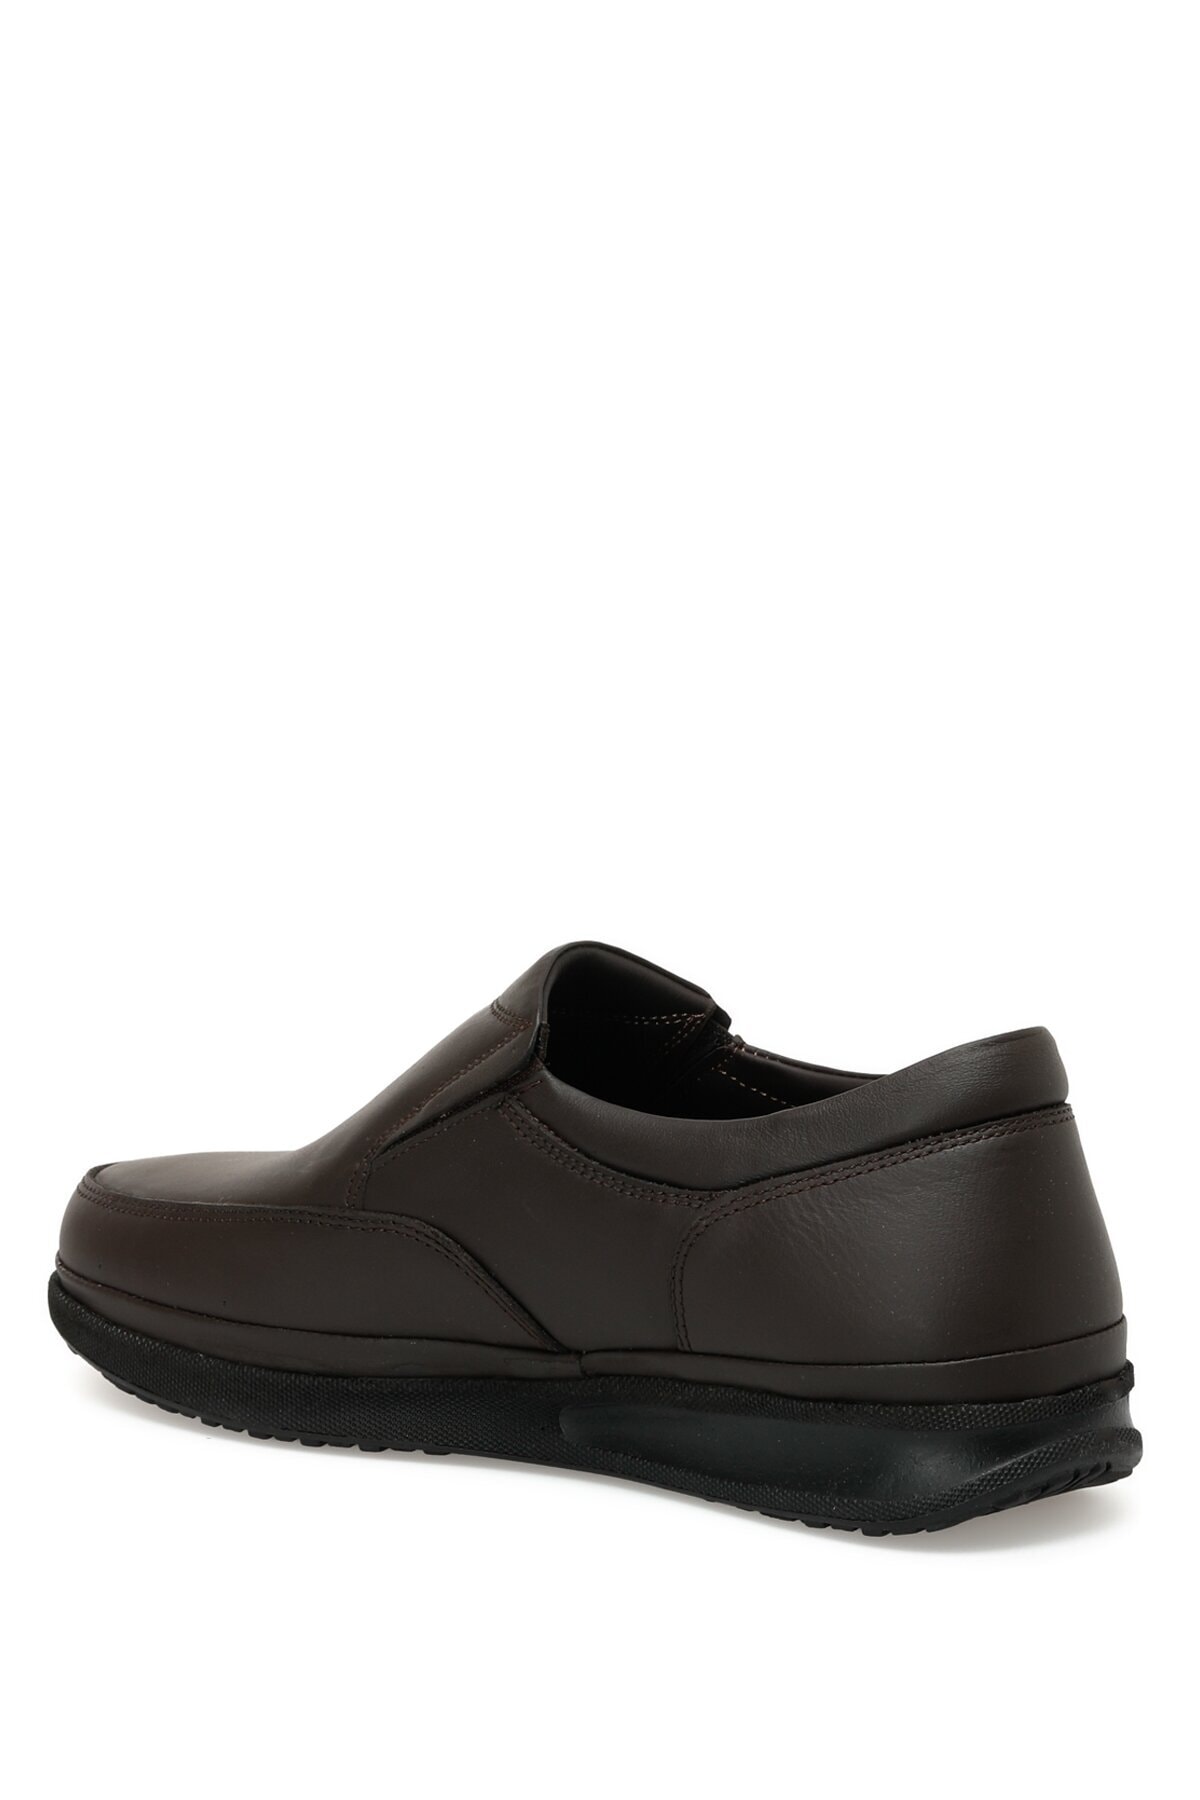 Salvano Comfy 2pr Kahverengi Erkek Ayakkabı